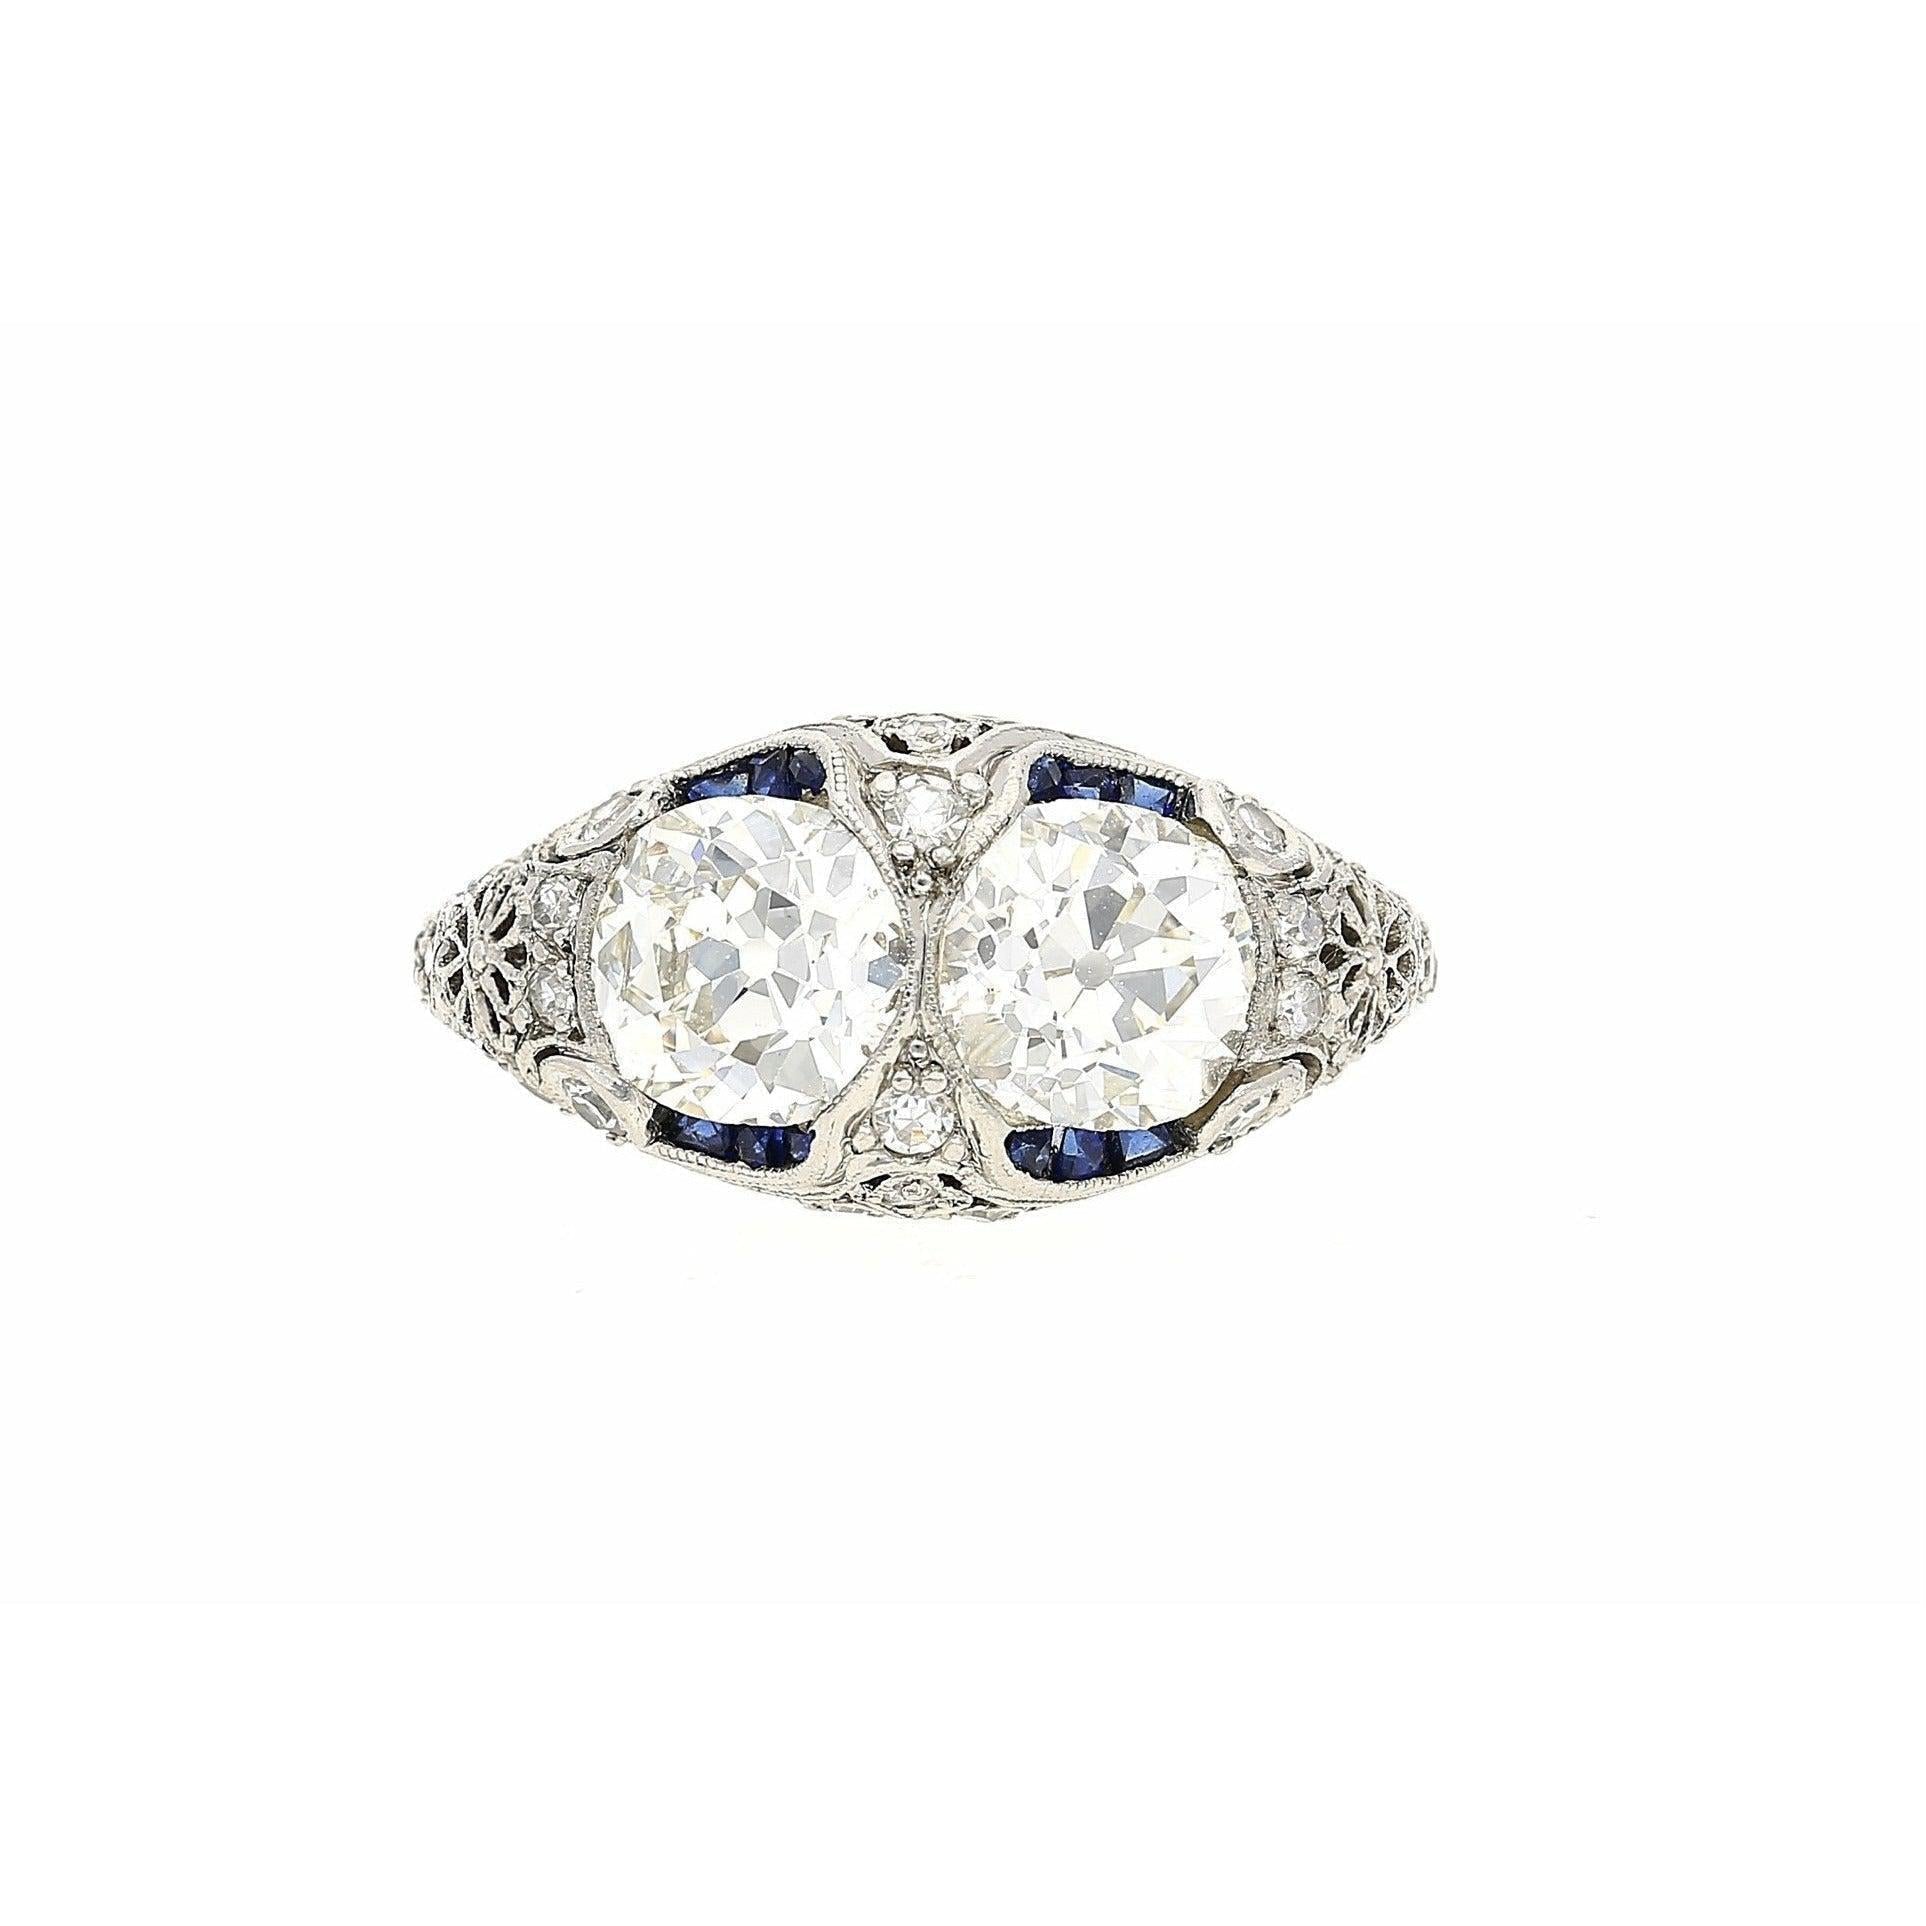 1930's Art Deco vintage 1.50 carat Old Mine Cut Double Diamond and Platinum Ring - ASSAY